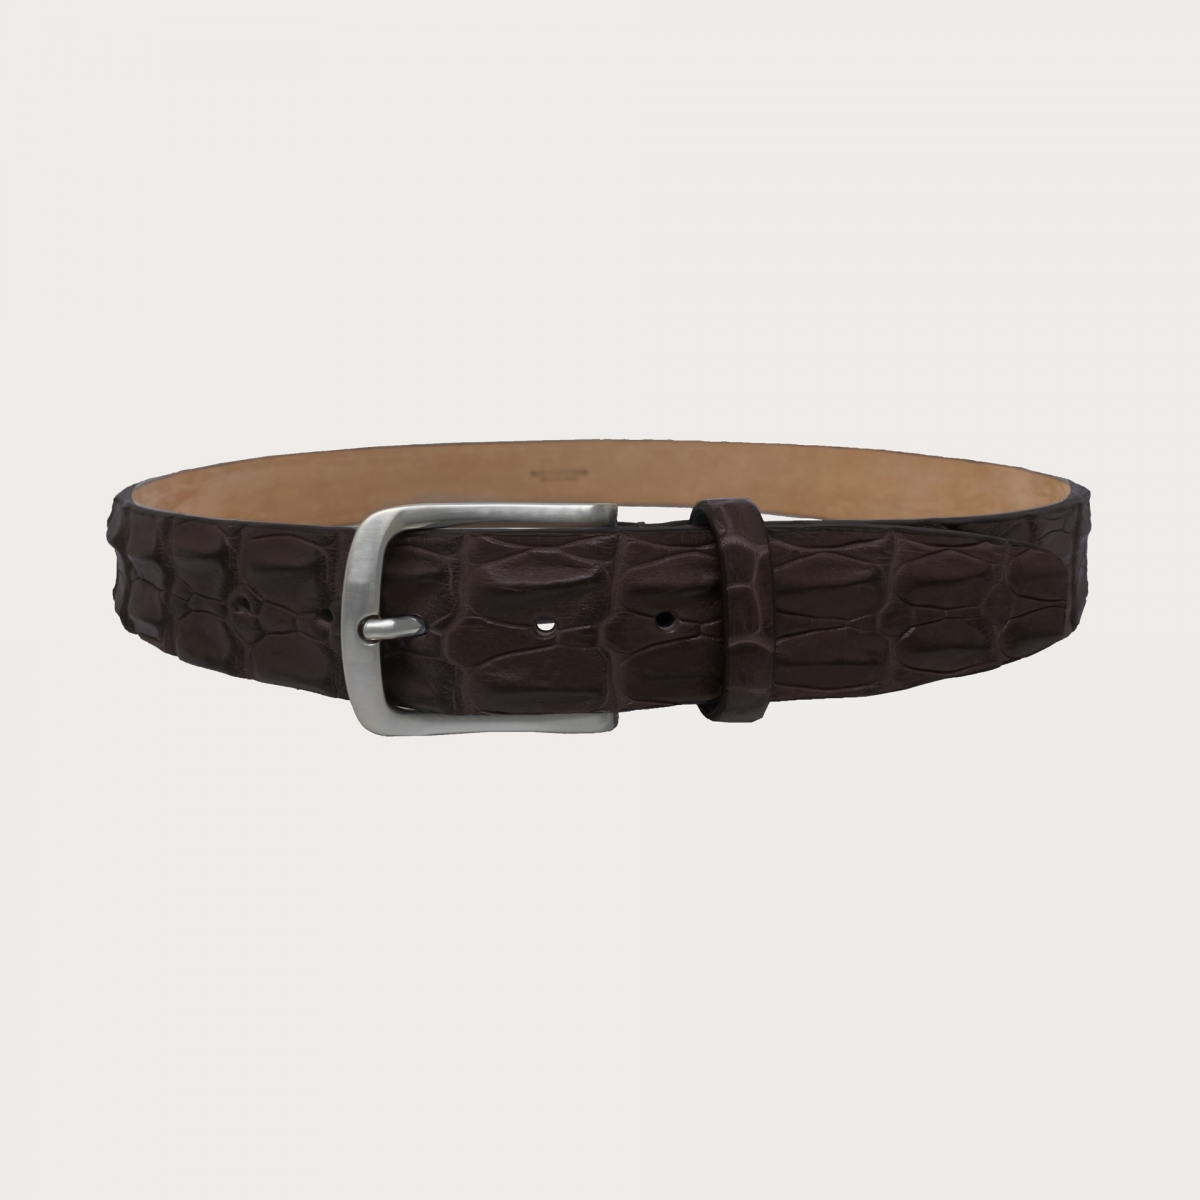 BRUCLE Sports belt in genuine crocodile leather, dark brown